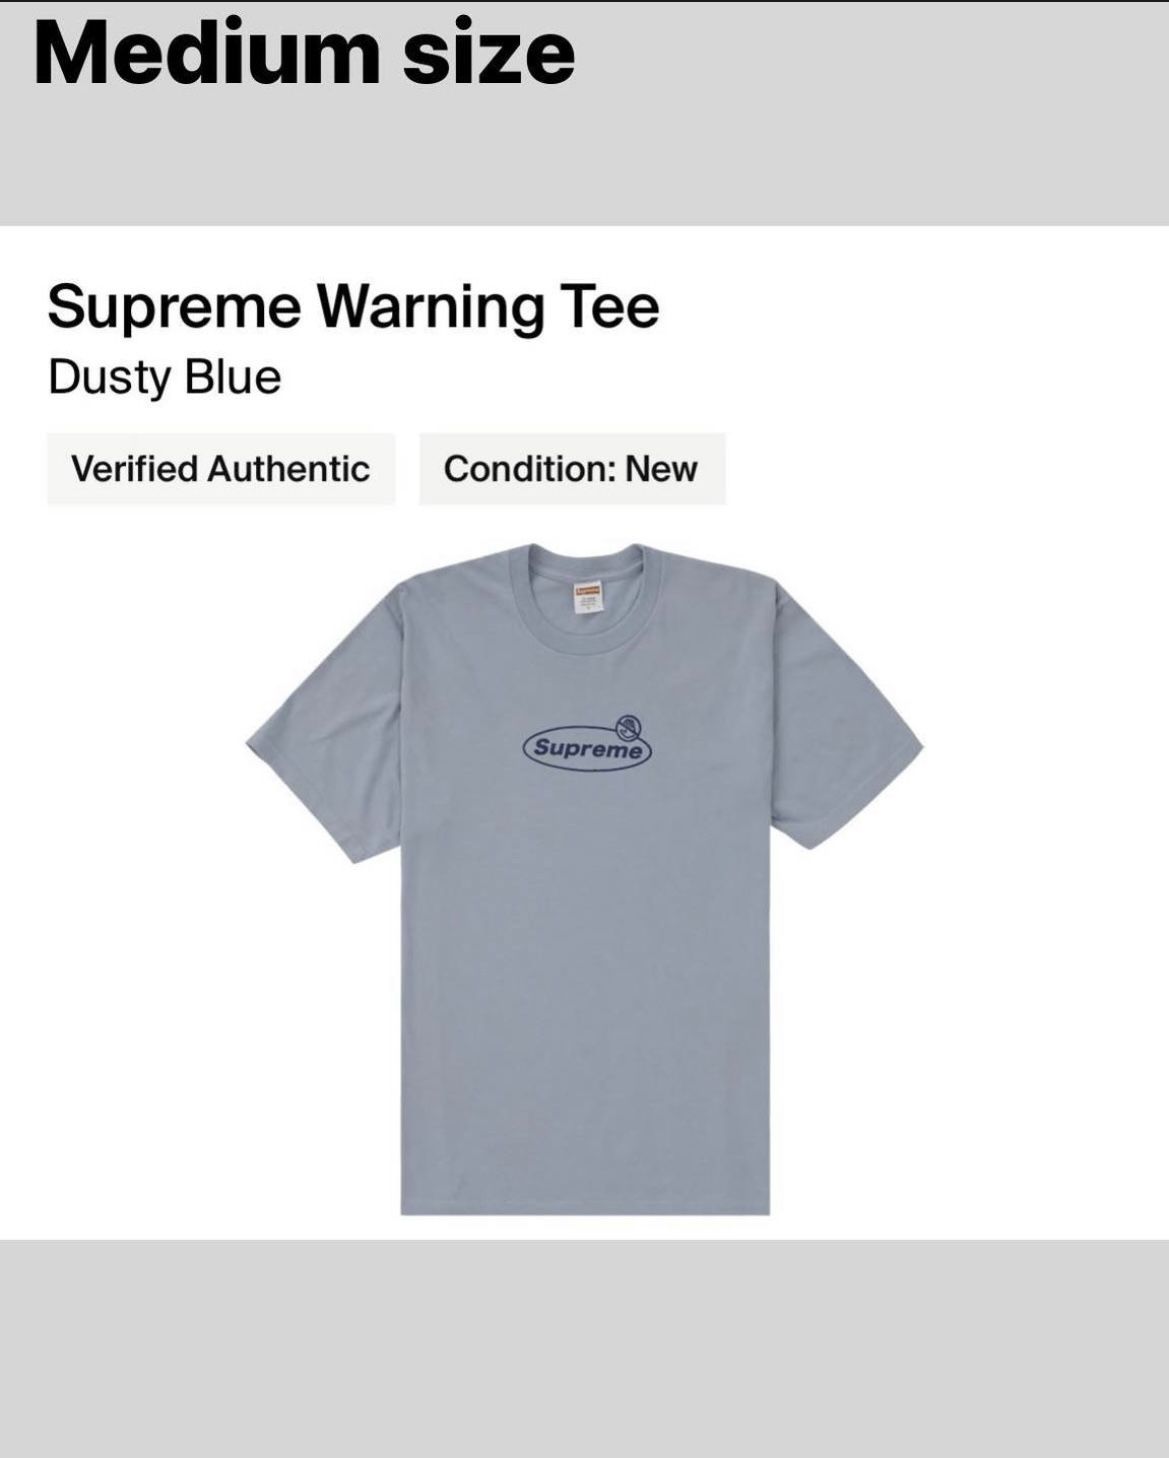 Supreme Warning Tee Dusty Blue